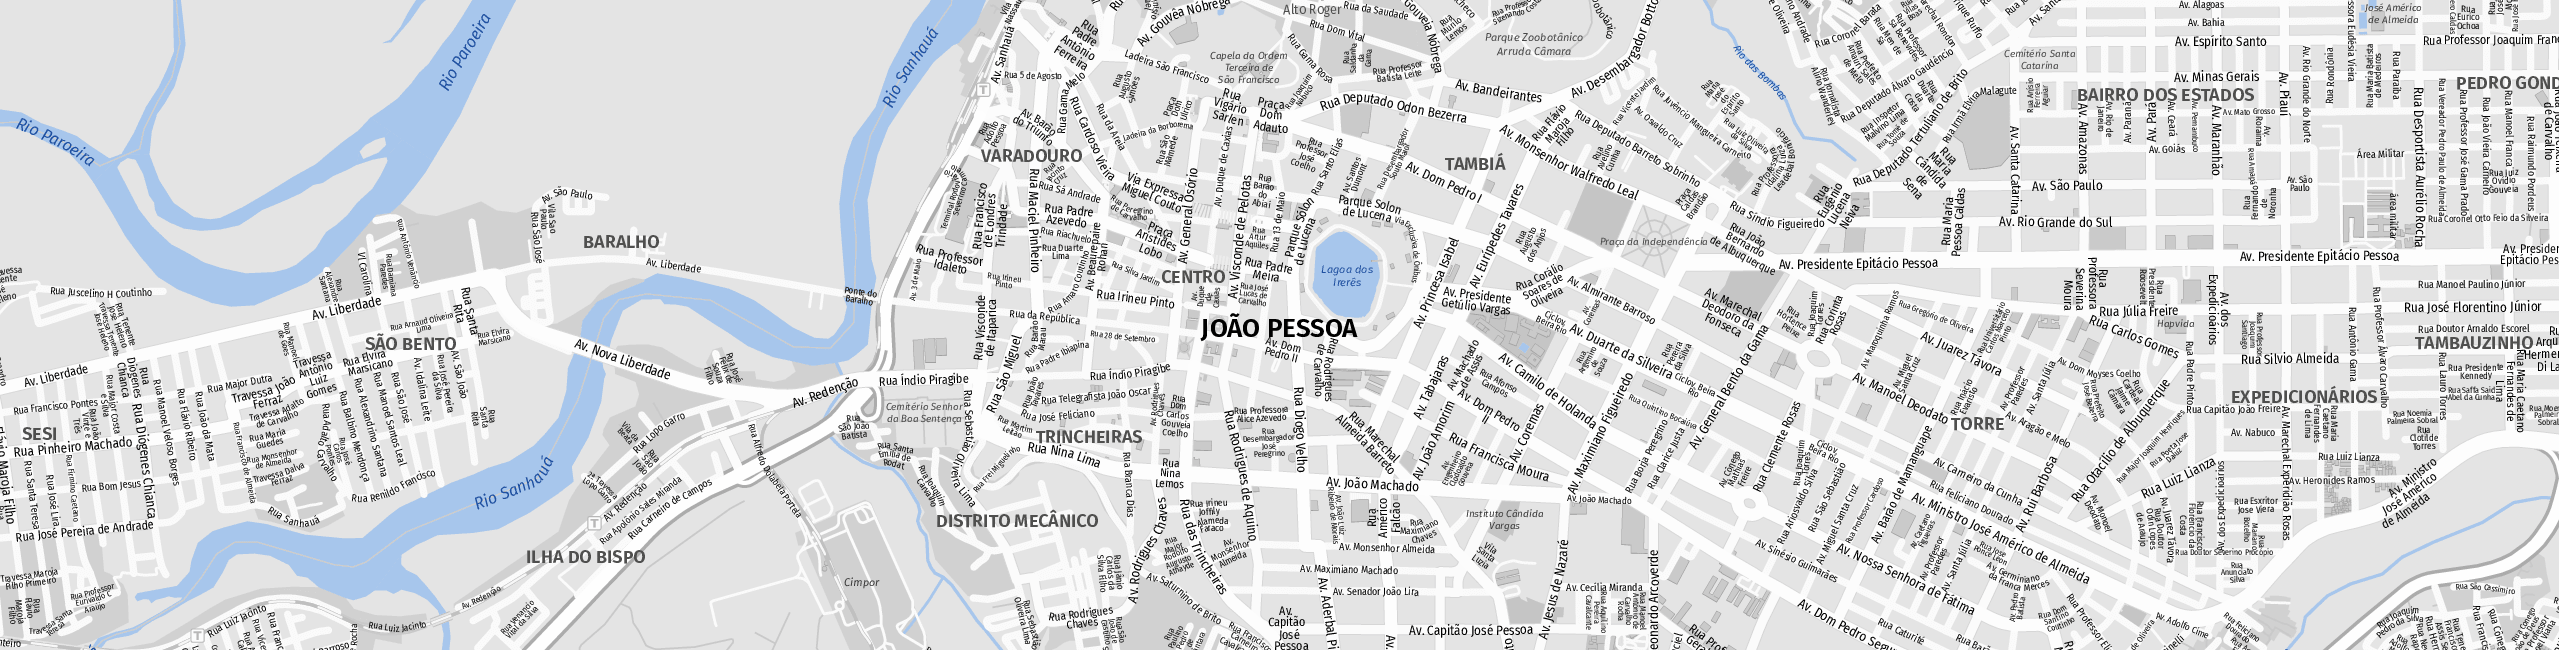 Stadtplan João Pessoa zum Downloaden.